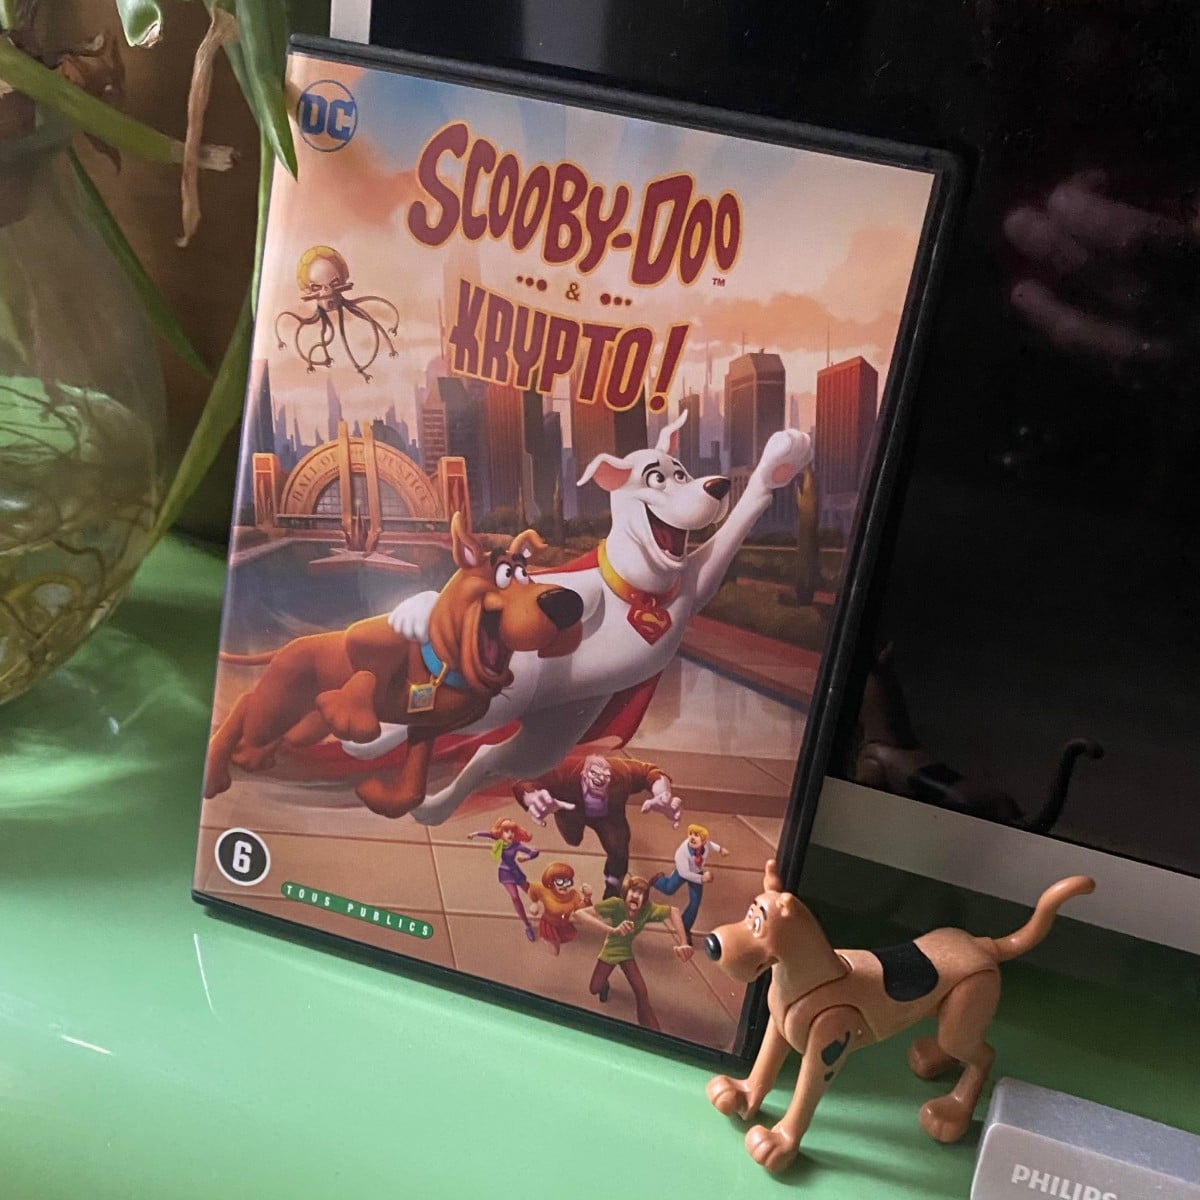 Scooby-Doo & Krypto film dvd